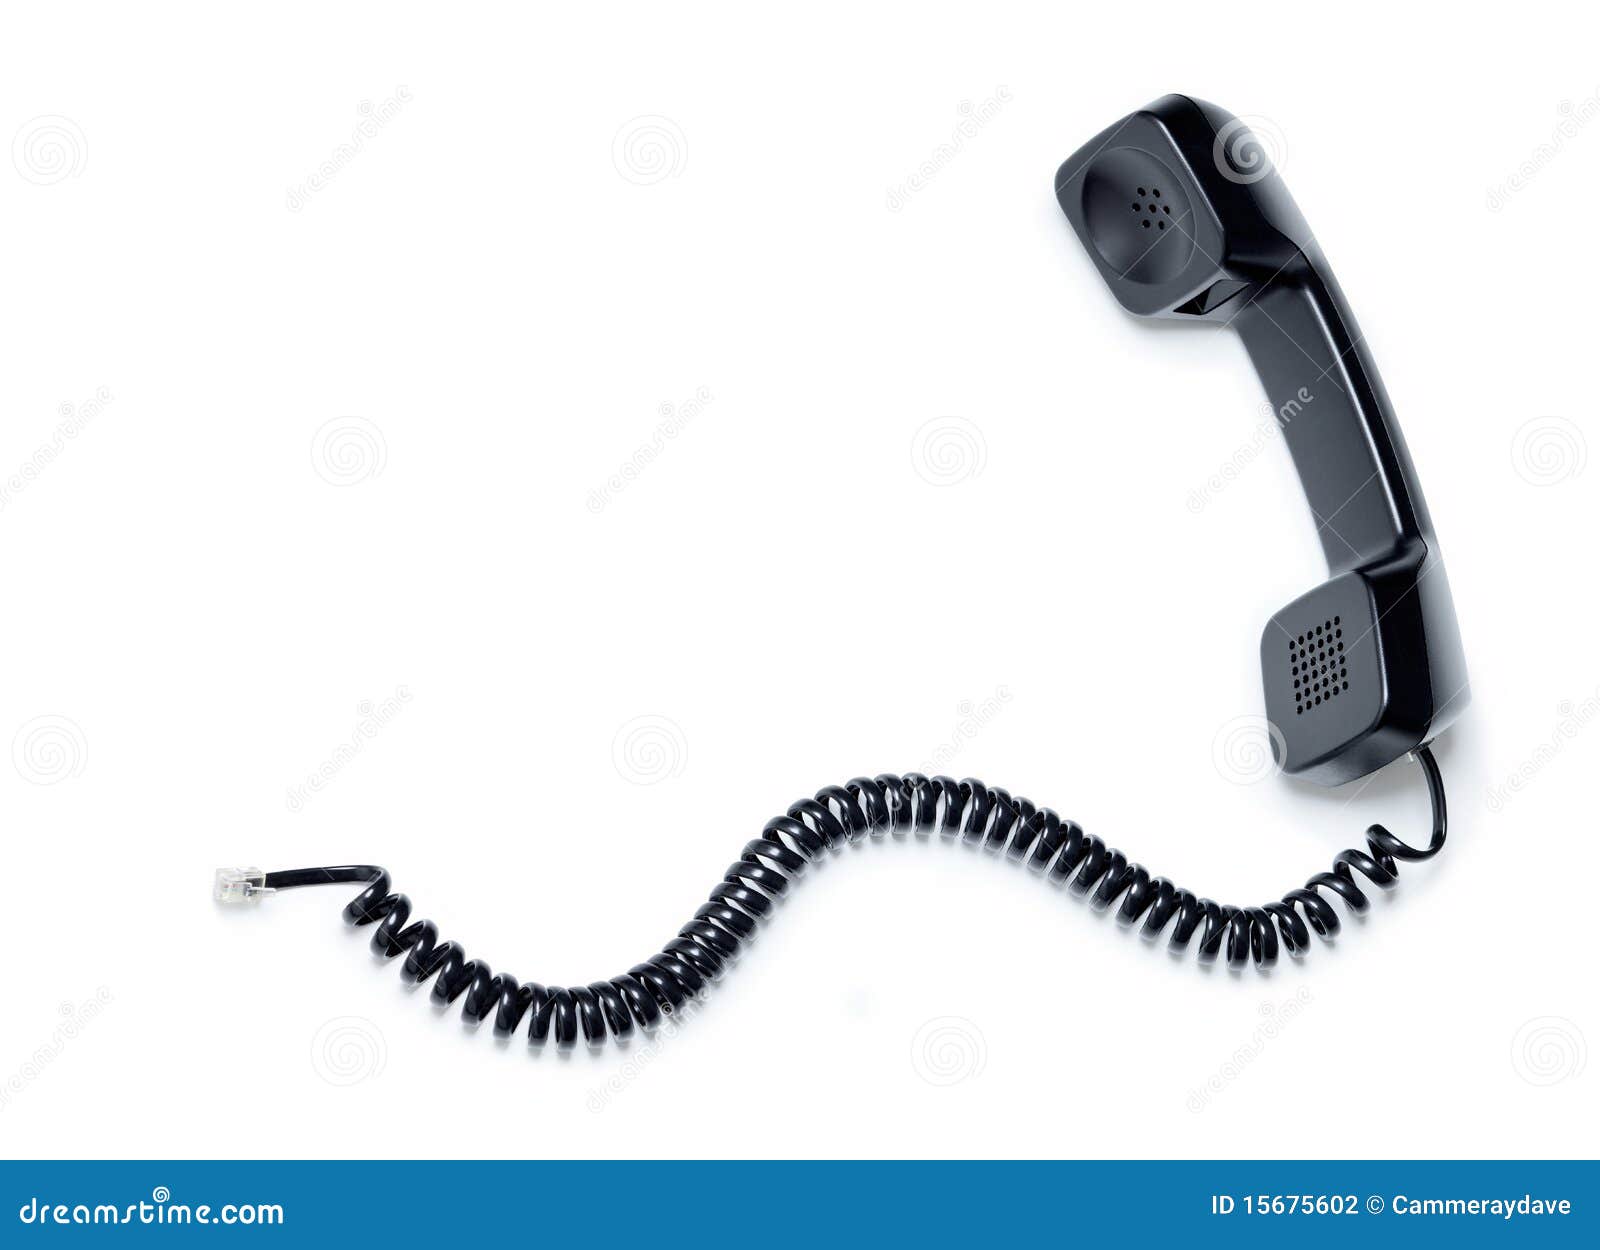 phone telephone receiver cord